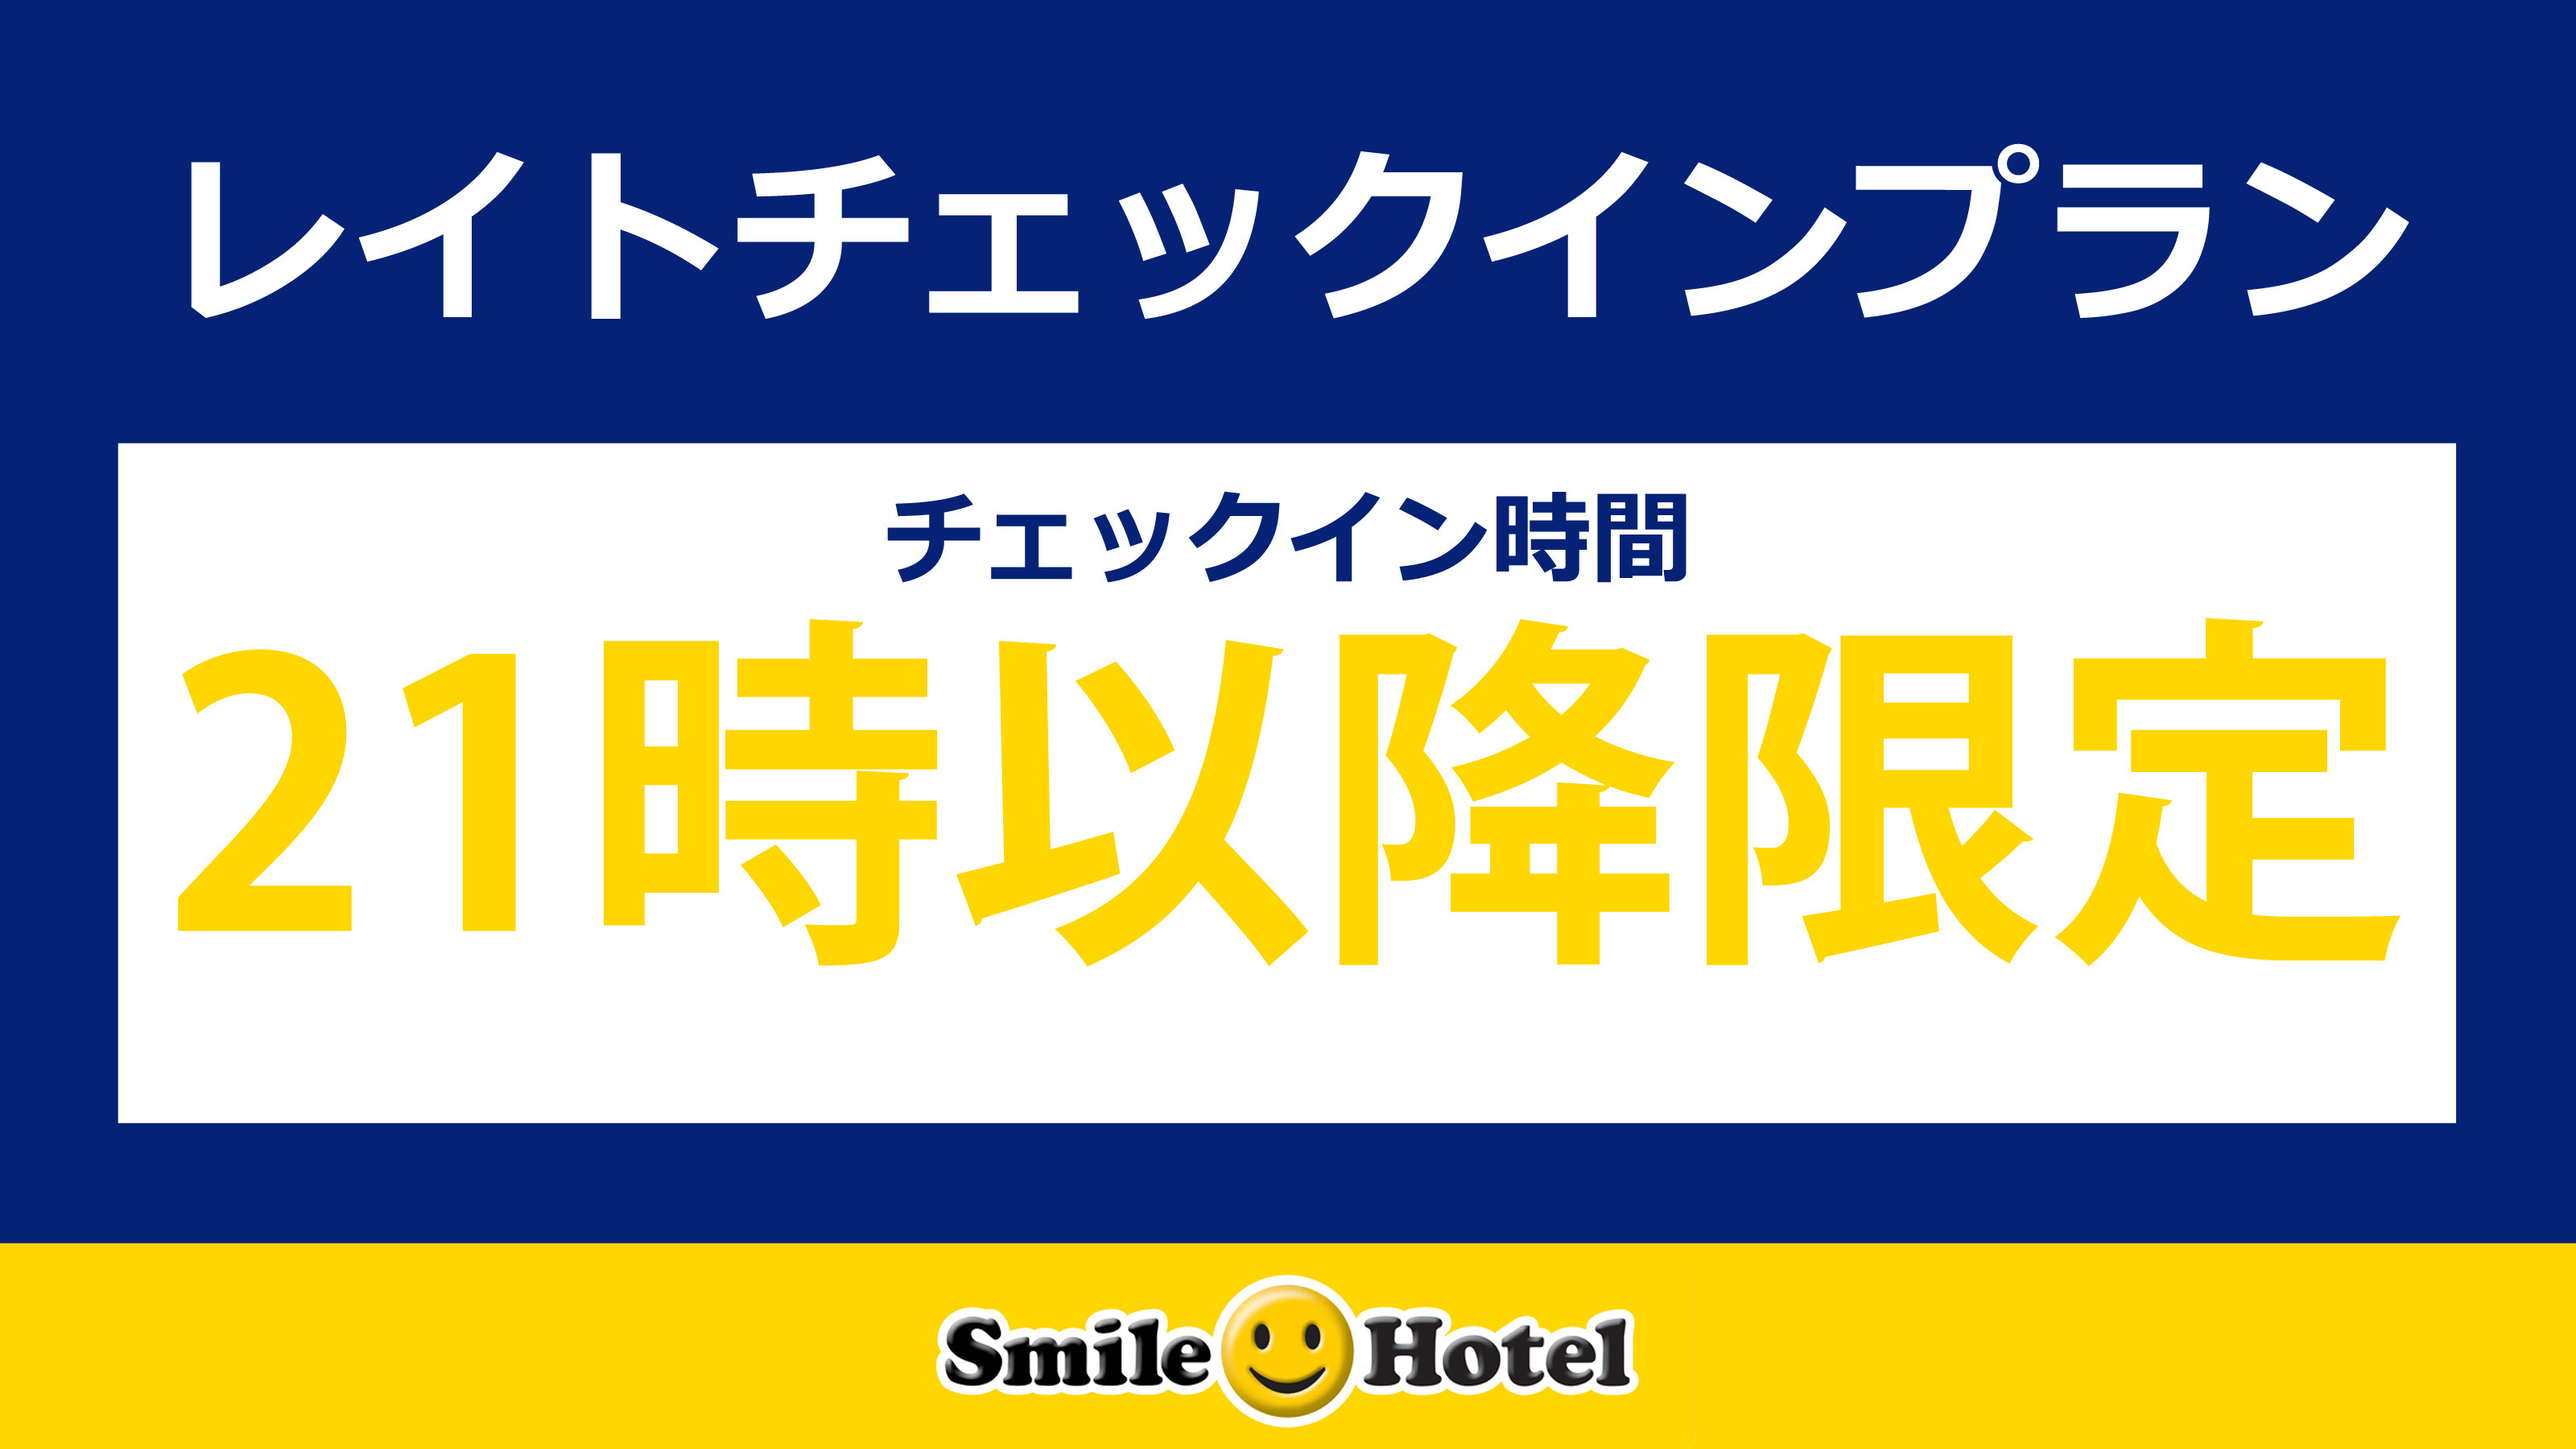 Smile Hotel Asahikawa